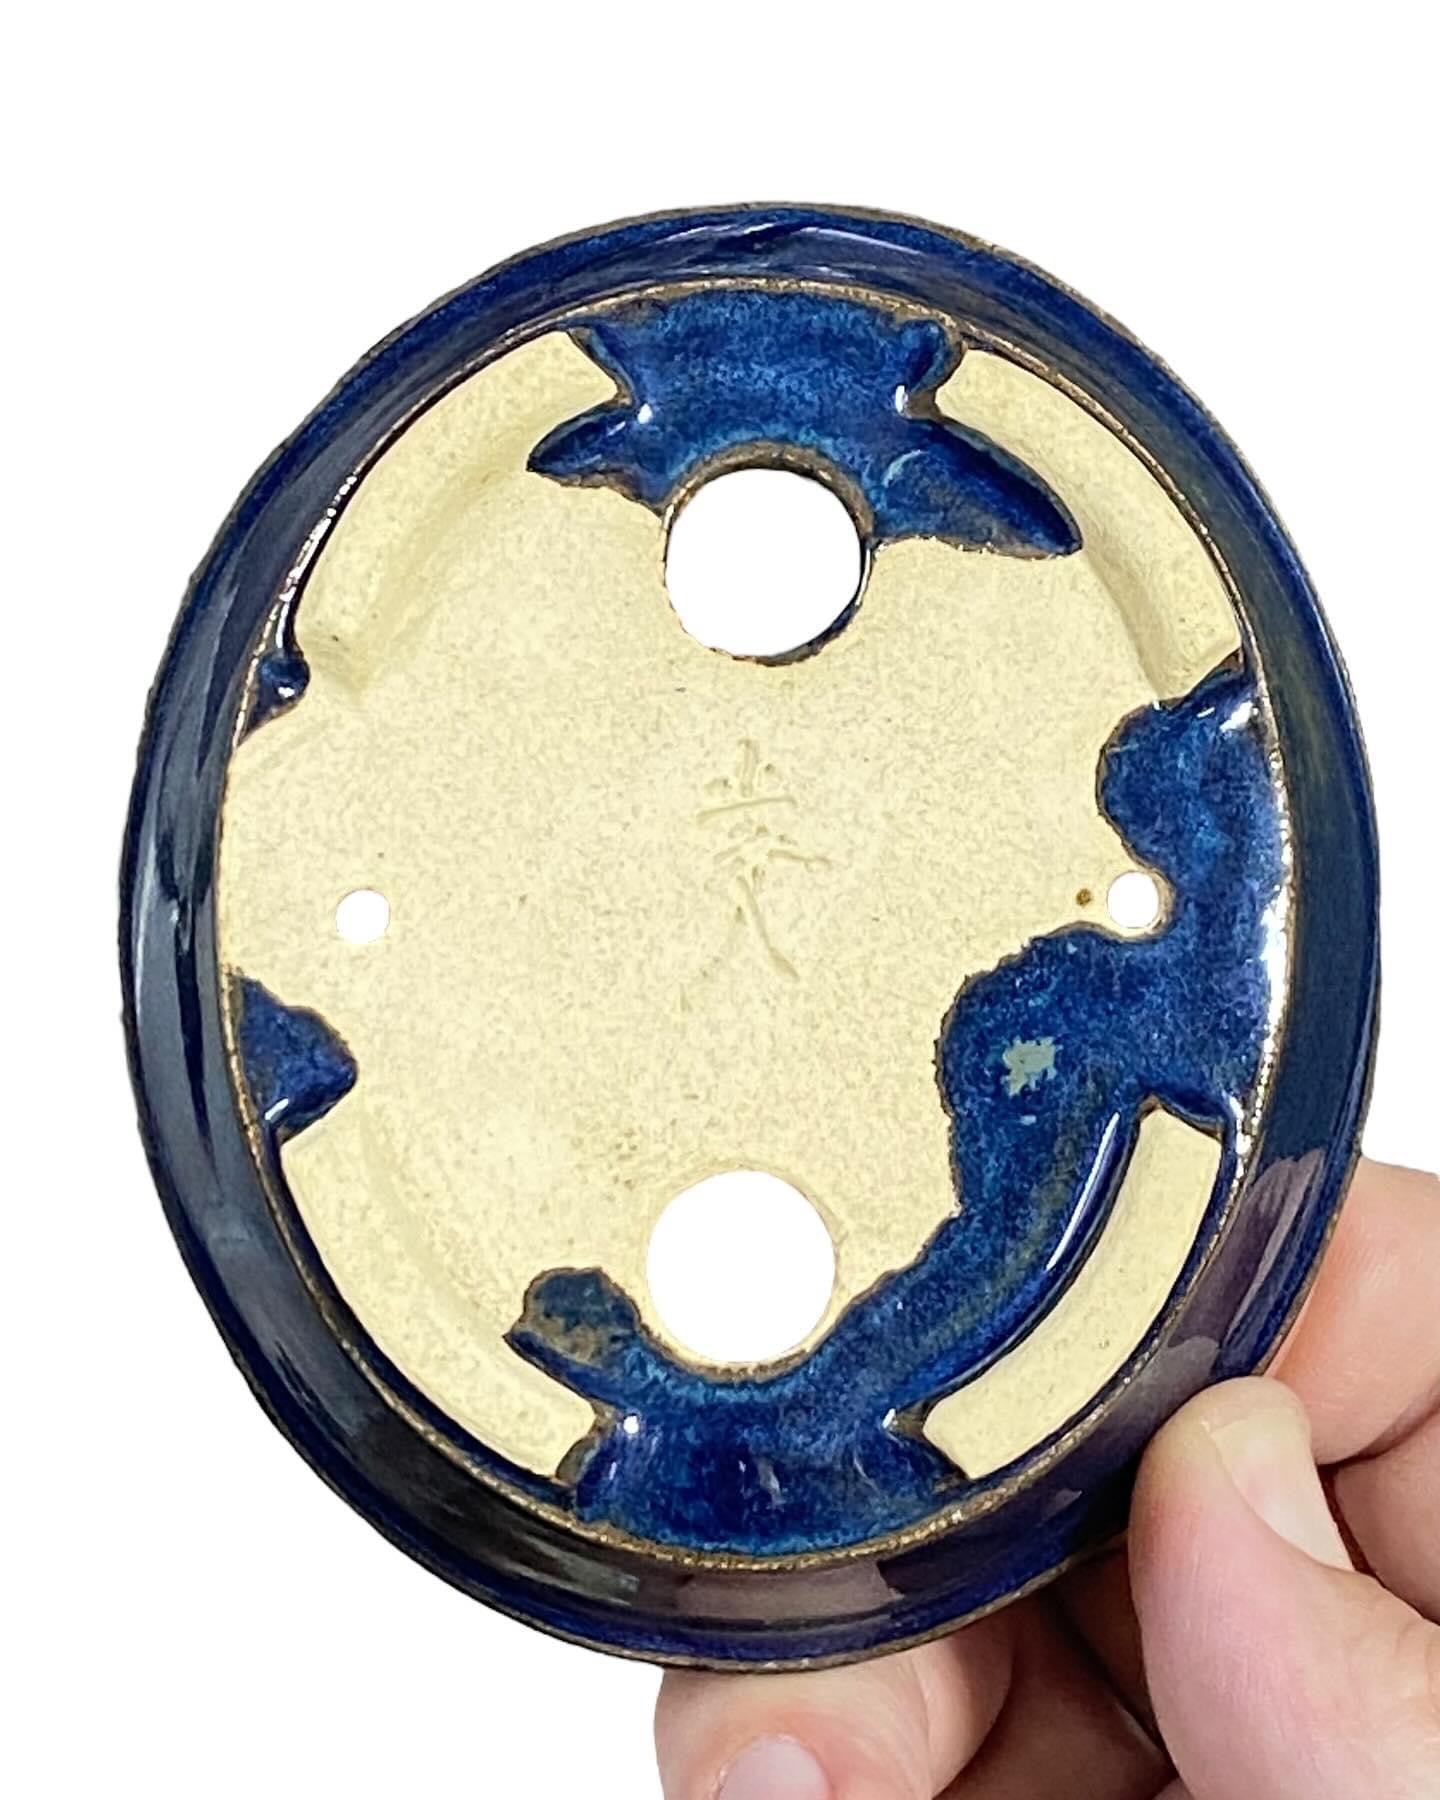 Dokou - Rich Blue Oval Bonsai or Accent Pot (3-5/16” wide)